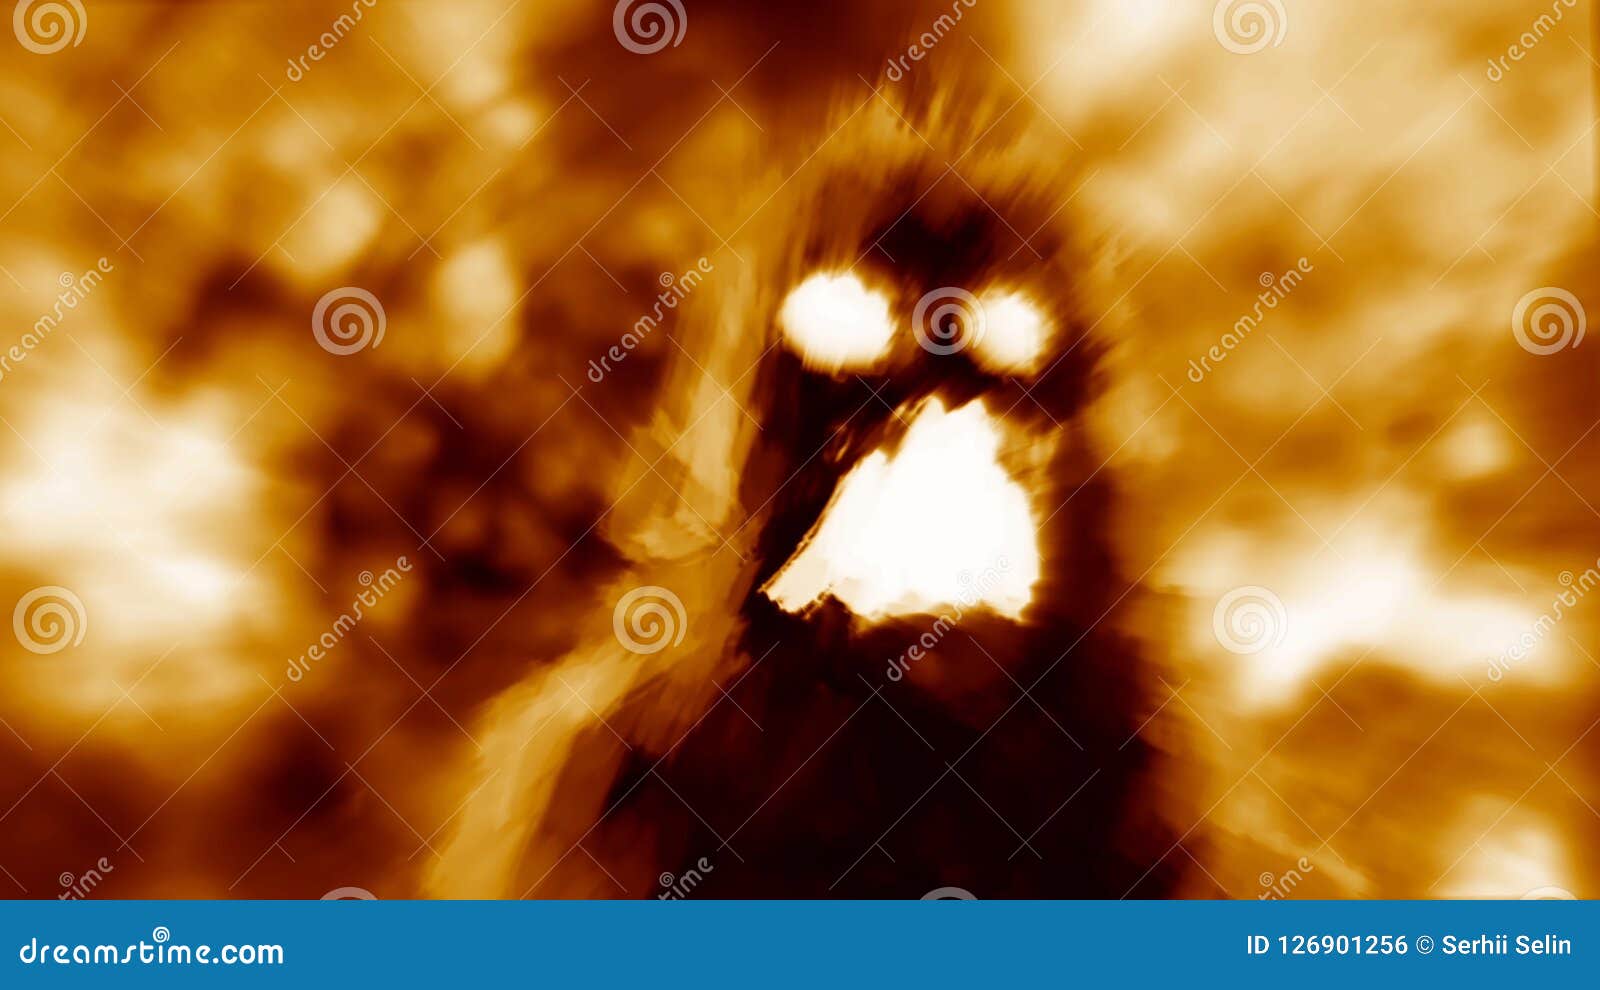 hellish monster shadow on orange background